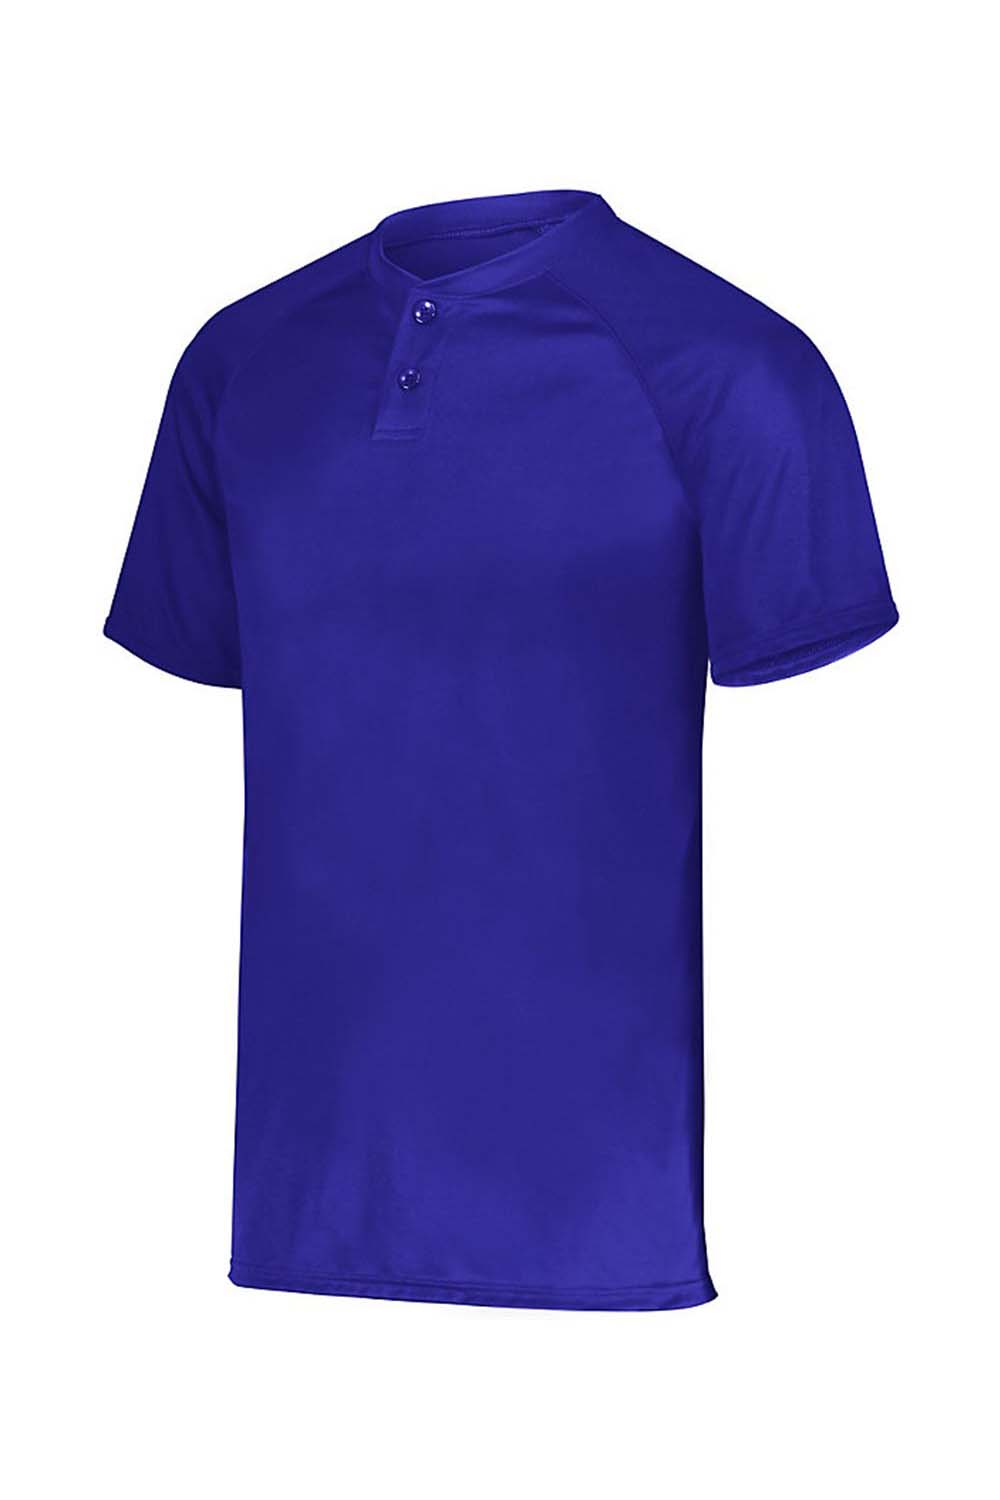 Augusta Sportswear AG1565 Mens Attain 2 Moisture Wicking Button Short Sleeve Baseball Jersey Purple Model Flat Front